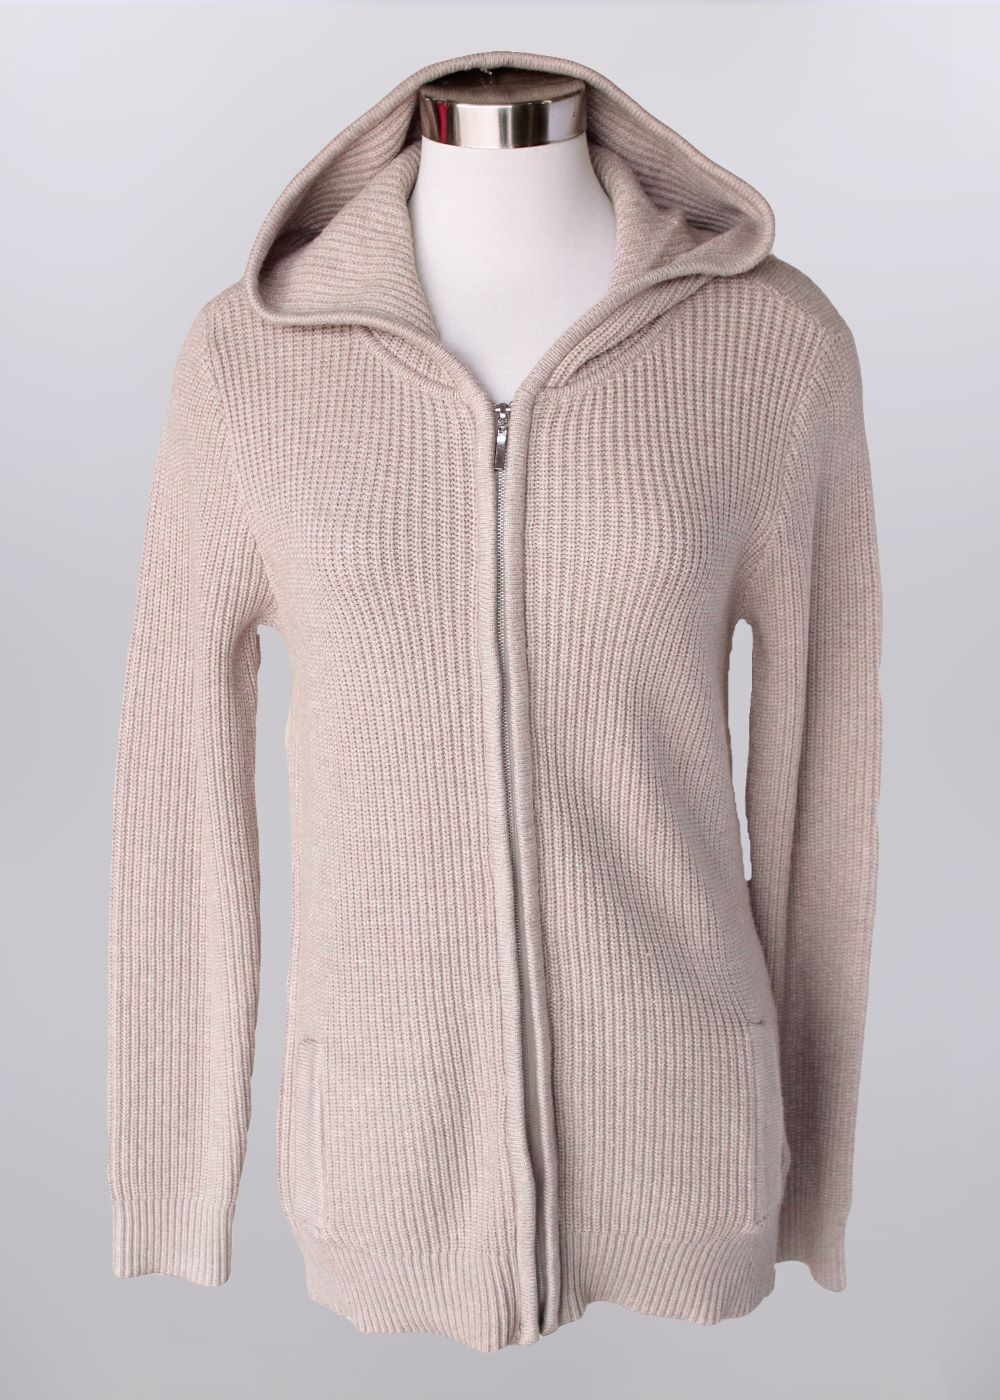 'Keren Hart' Women's Full Zip Knit Hooded Sweater - Khaki